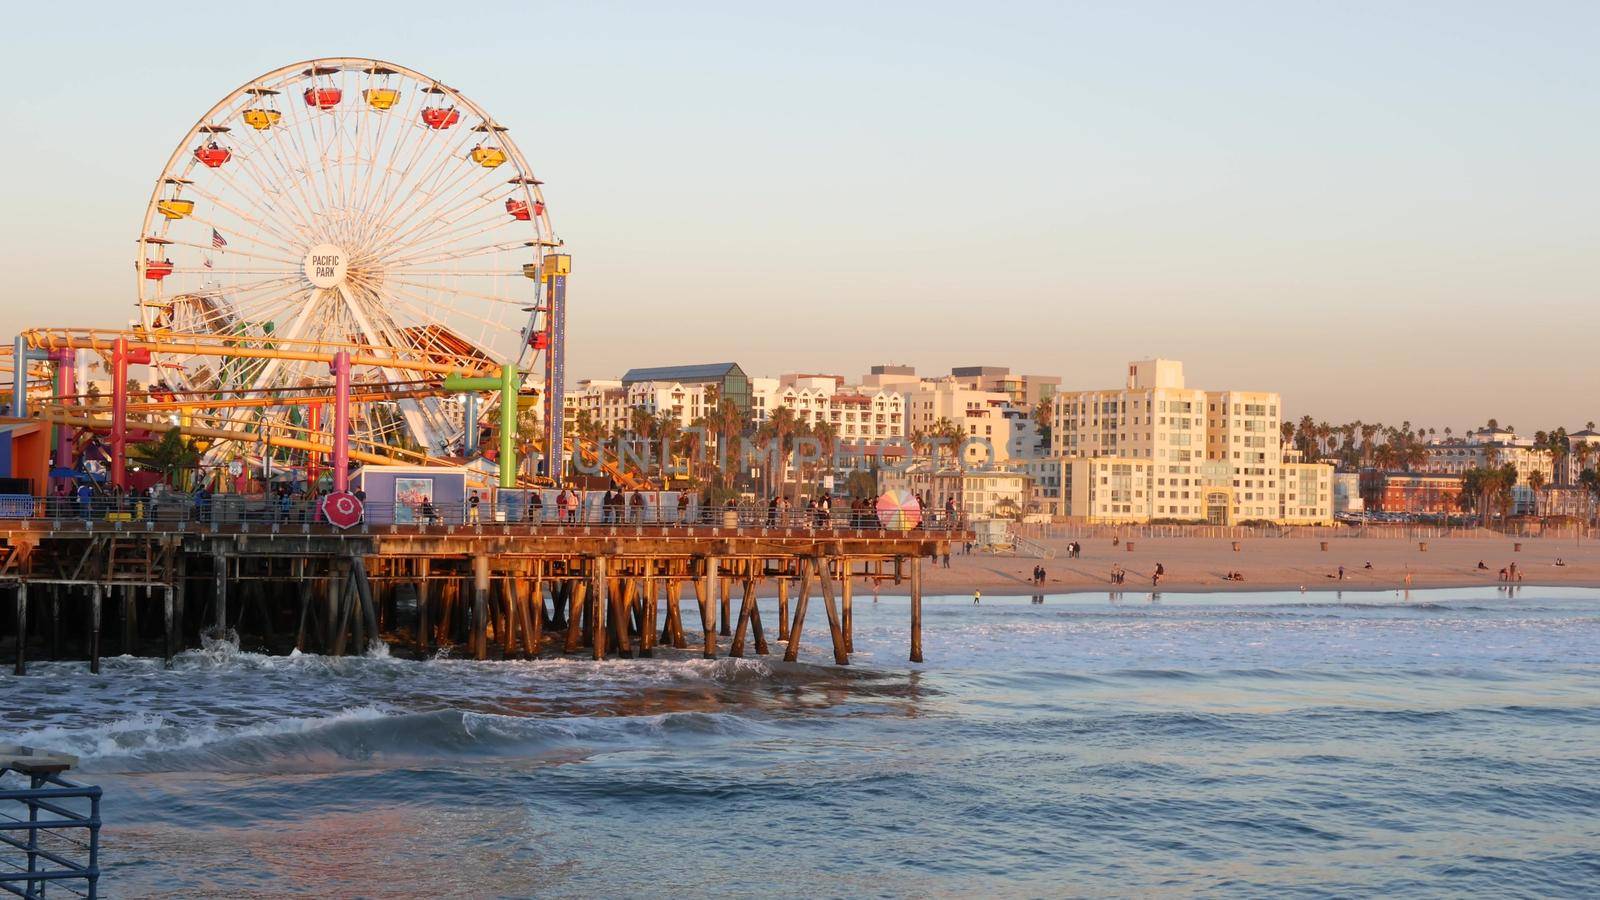 SANTA MONICA, LOS ANGELES CA USA - 19 DEC 2019: Classic ferris wheel in amusement park on pier. California summertime beach aesthetic, ocean waves in pink sunset. Summertime iconic symbol by DogoraSun